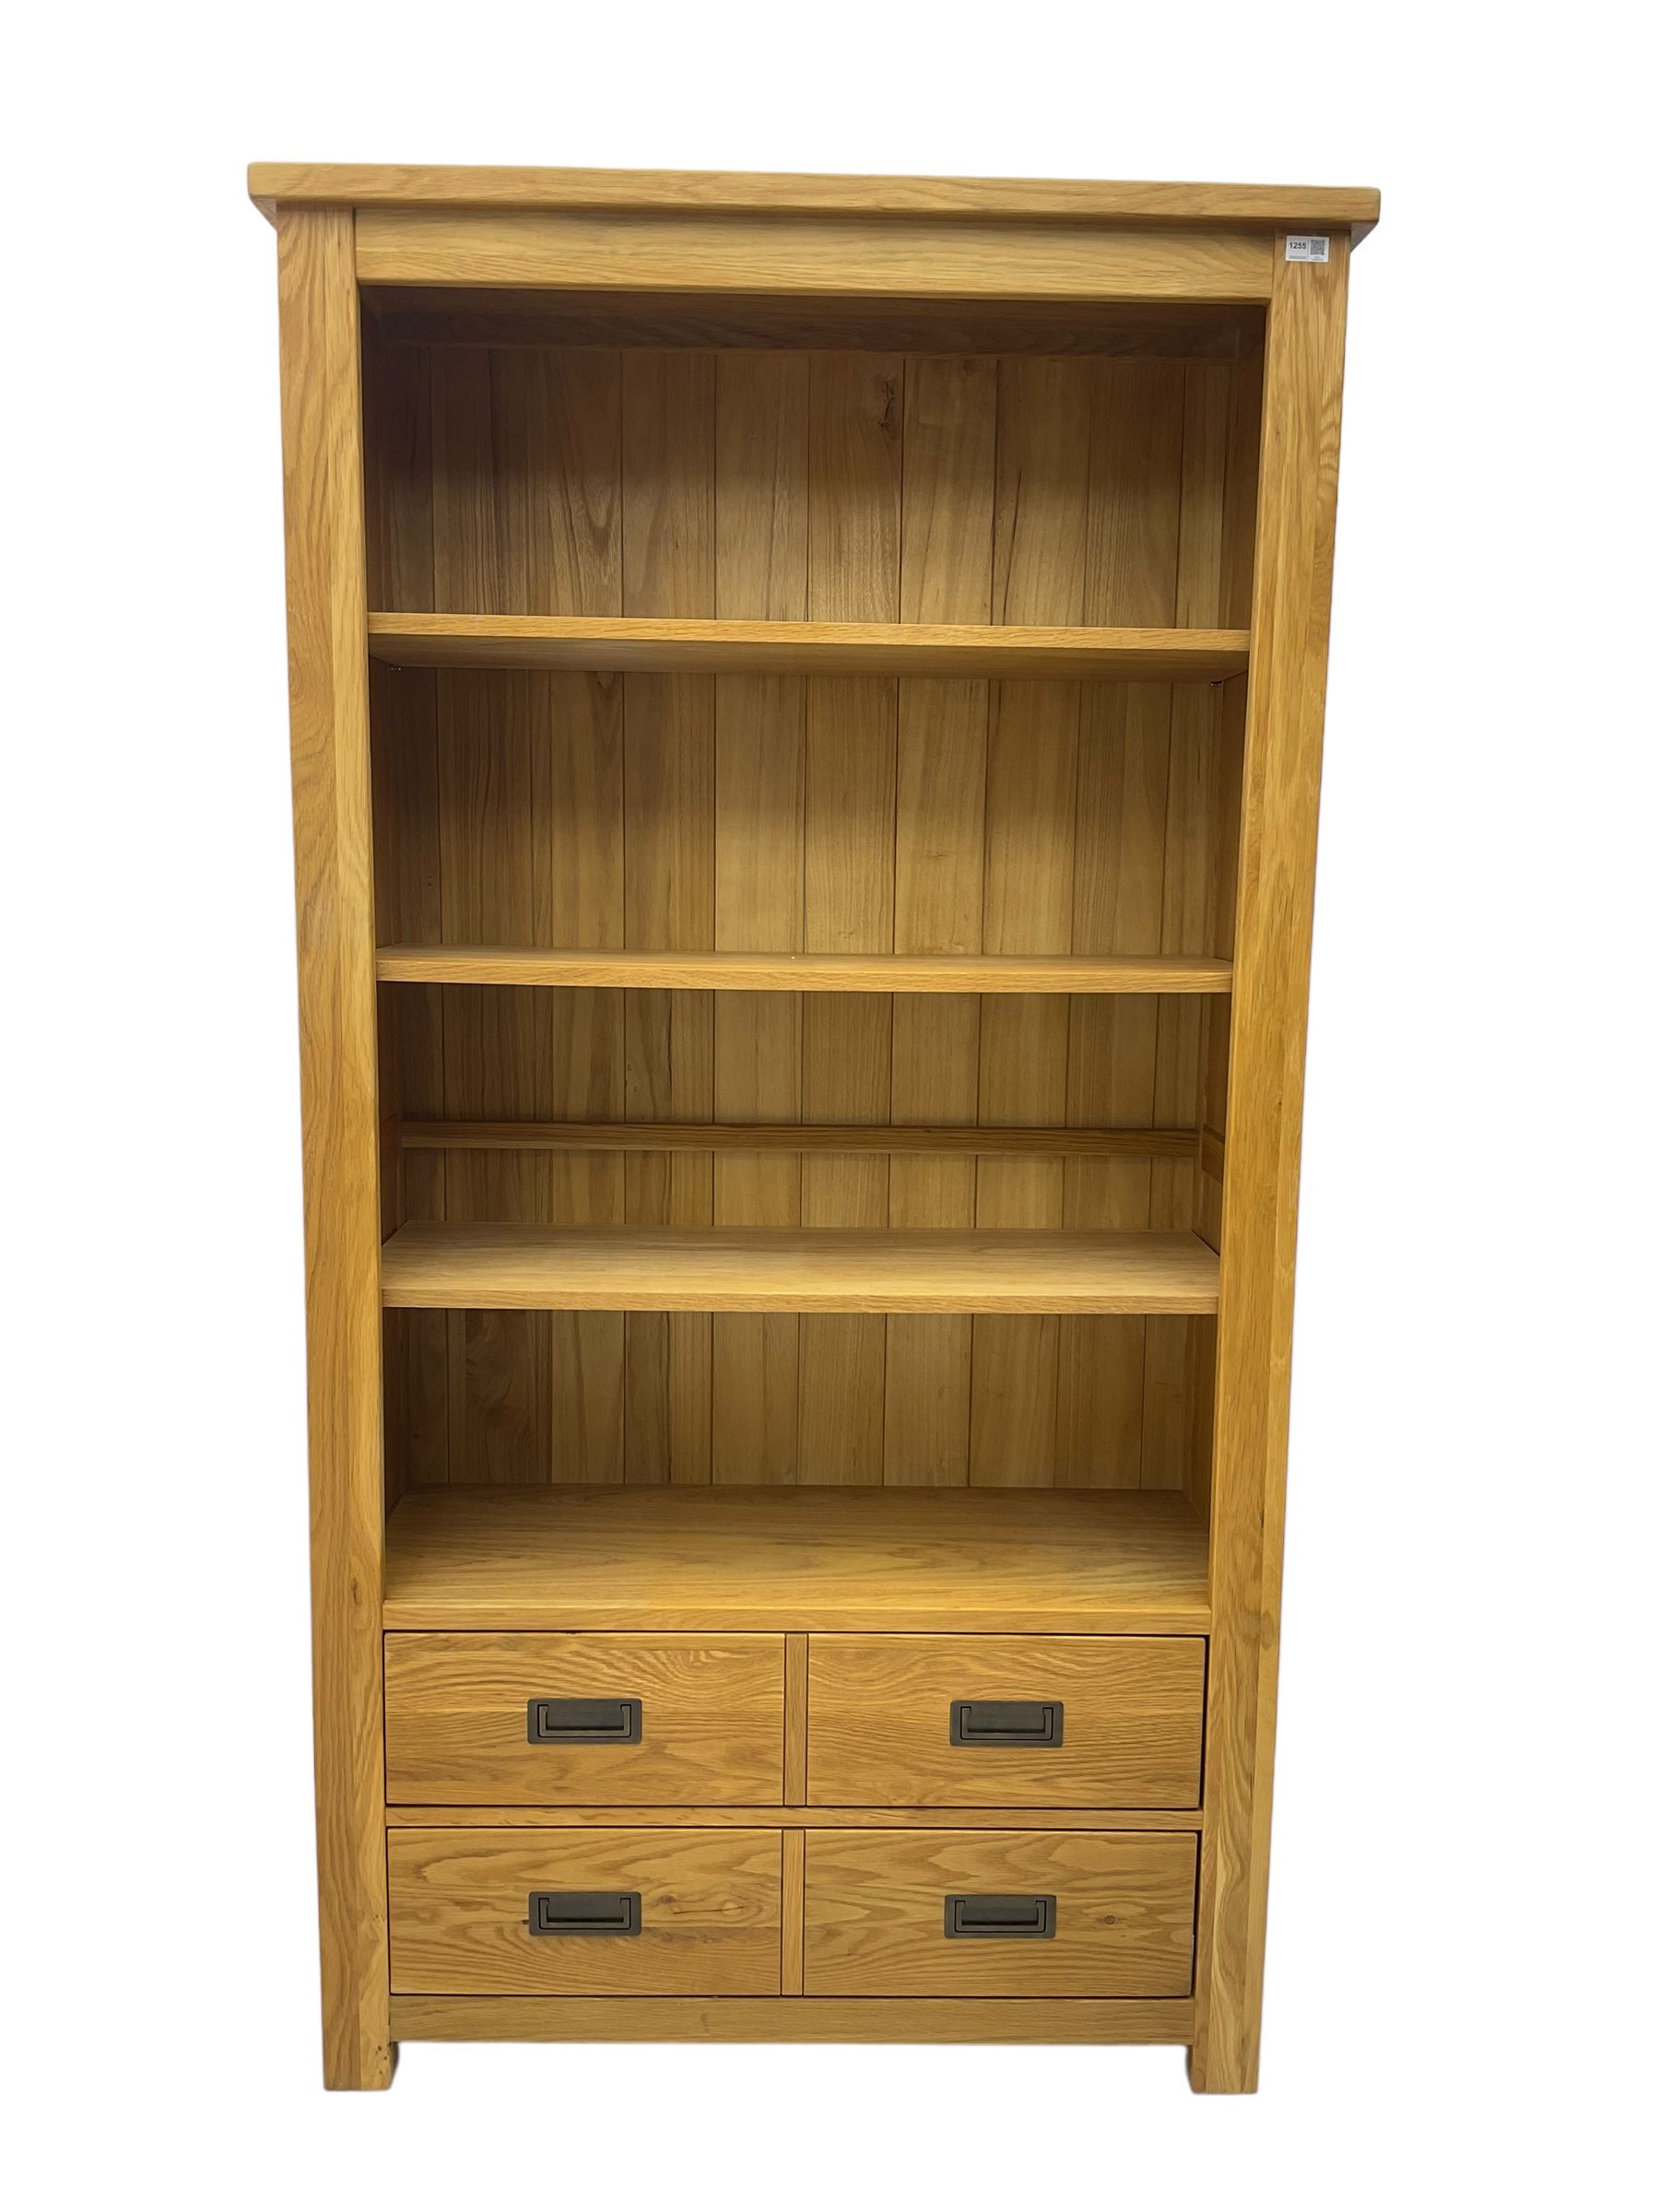 'Galloway' oak open wide bookcase - Image 2 of 7